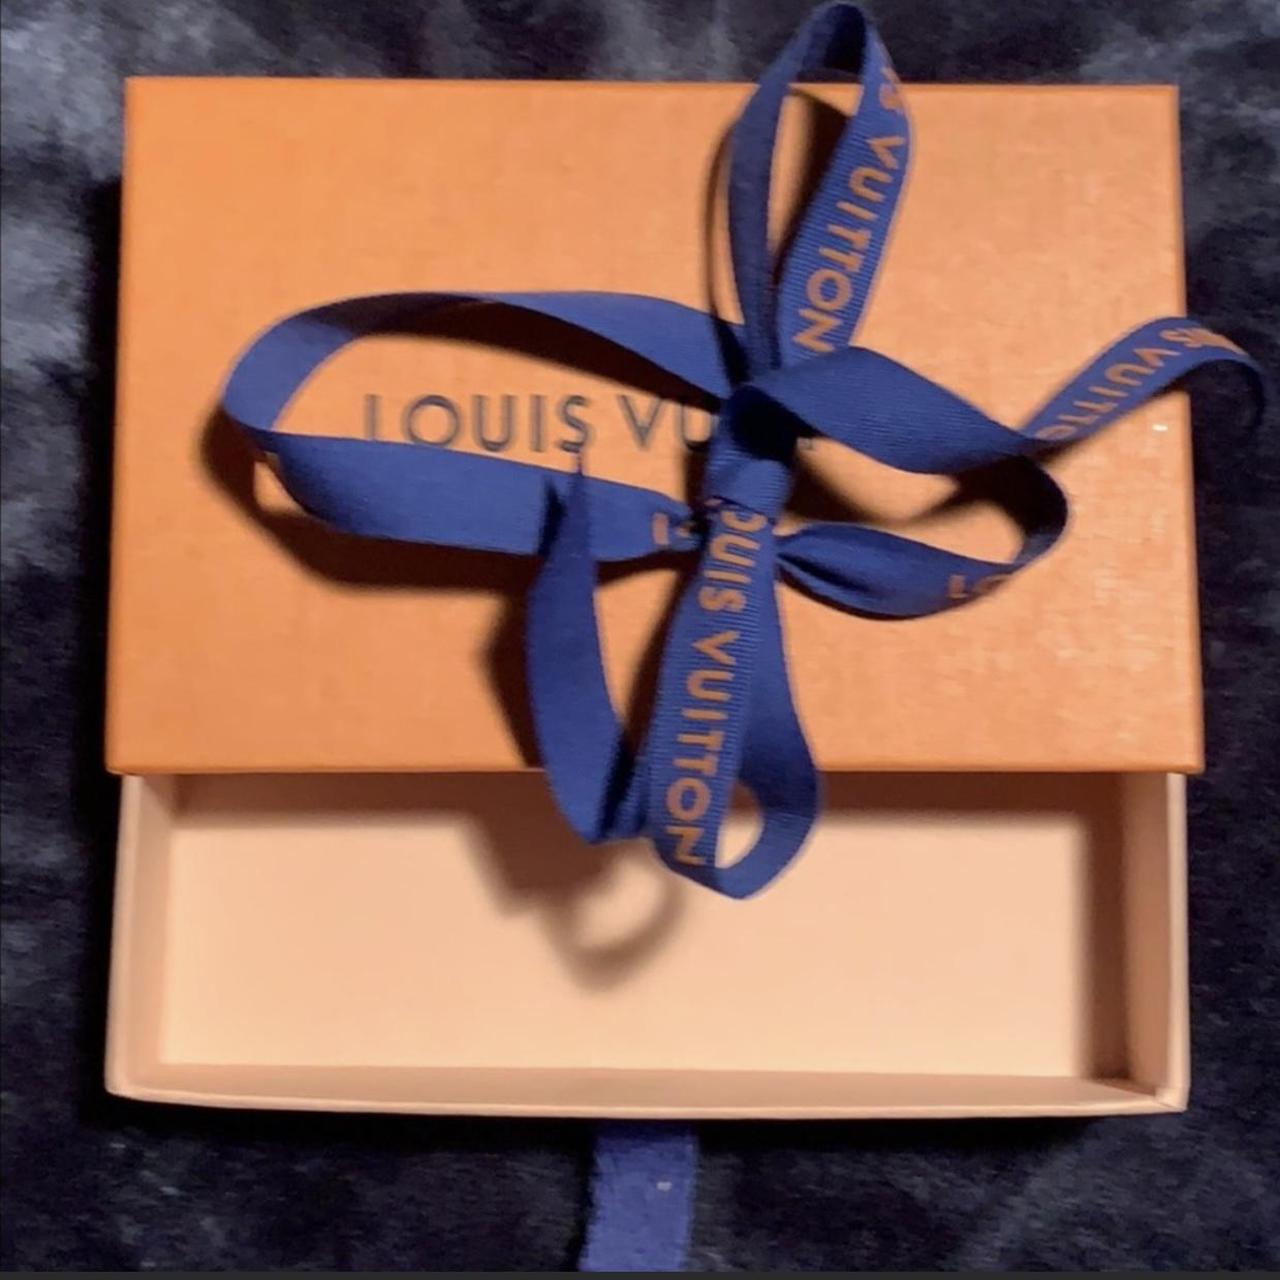 Louis Vuitton empty box